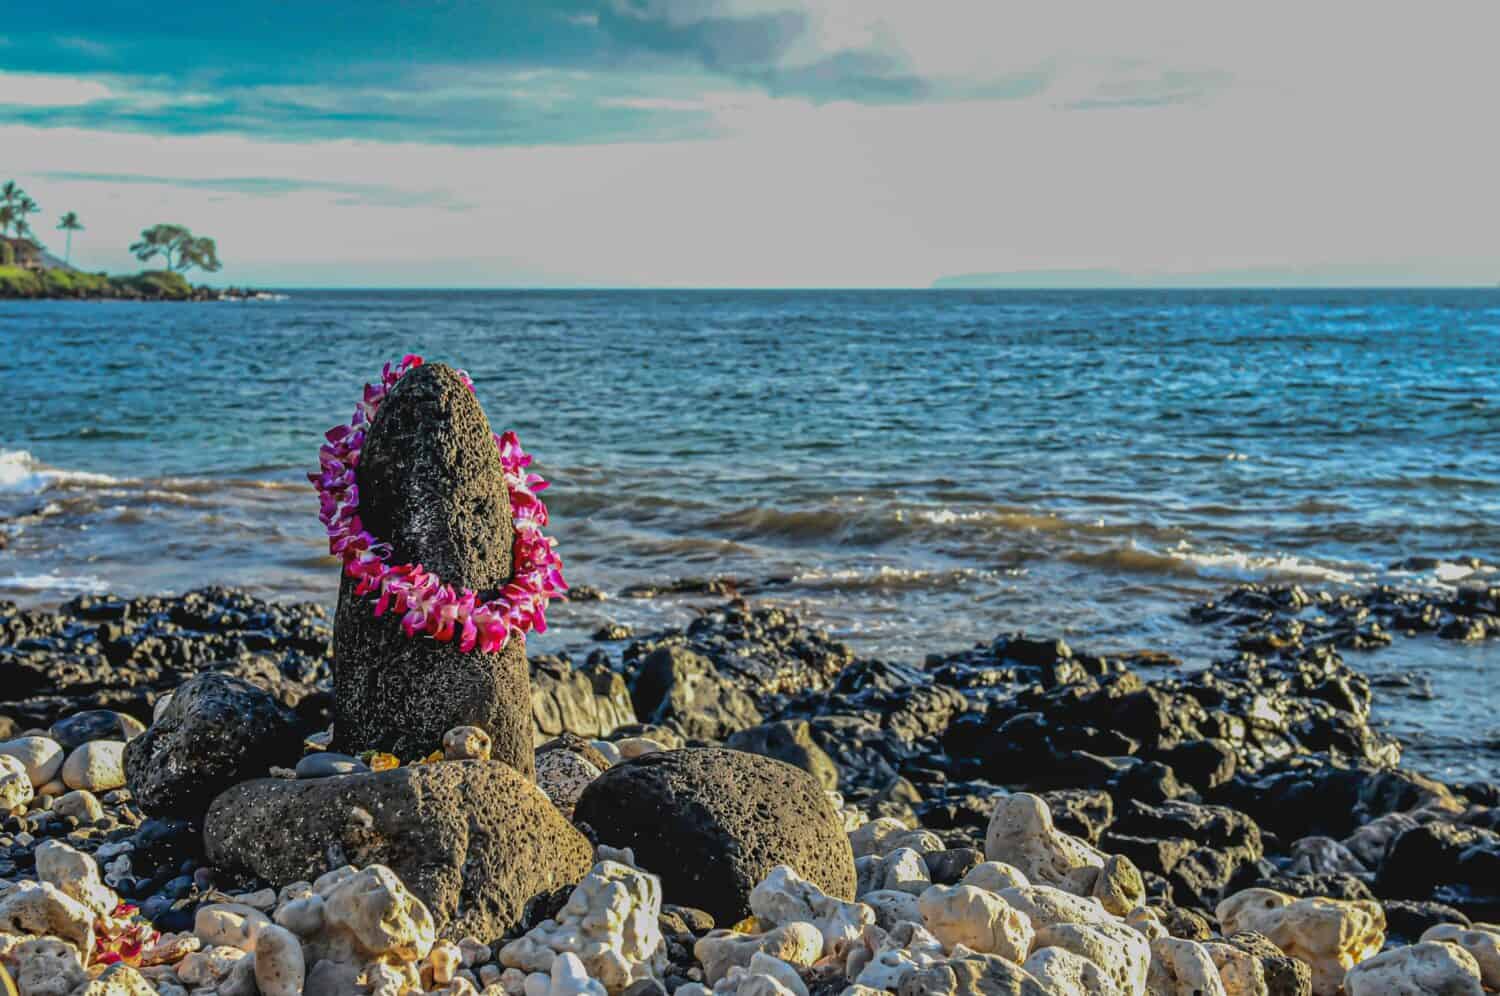 The Ku'ula stone, a fisherman's shrine off the coastal walkway in Wailea, Maui, Hawaii